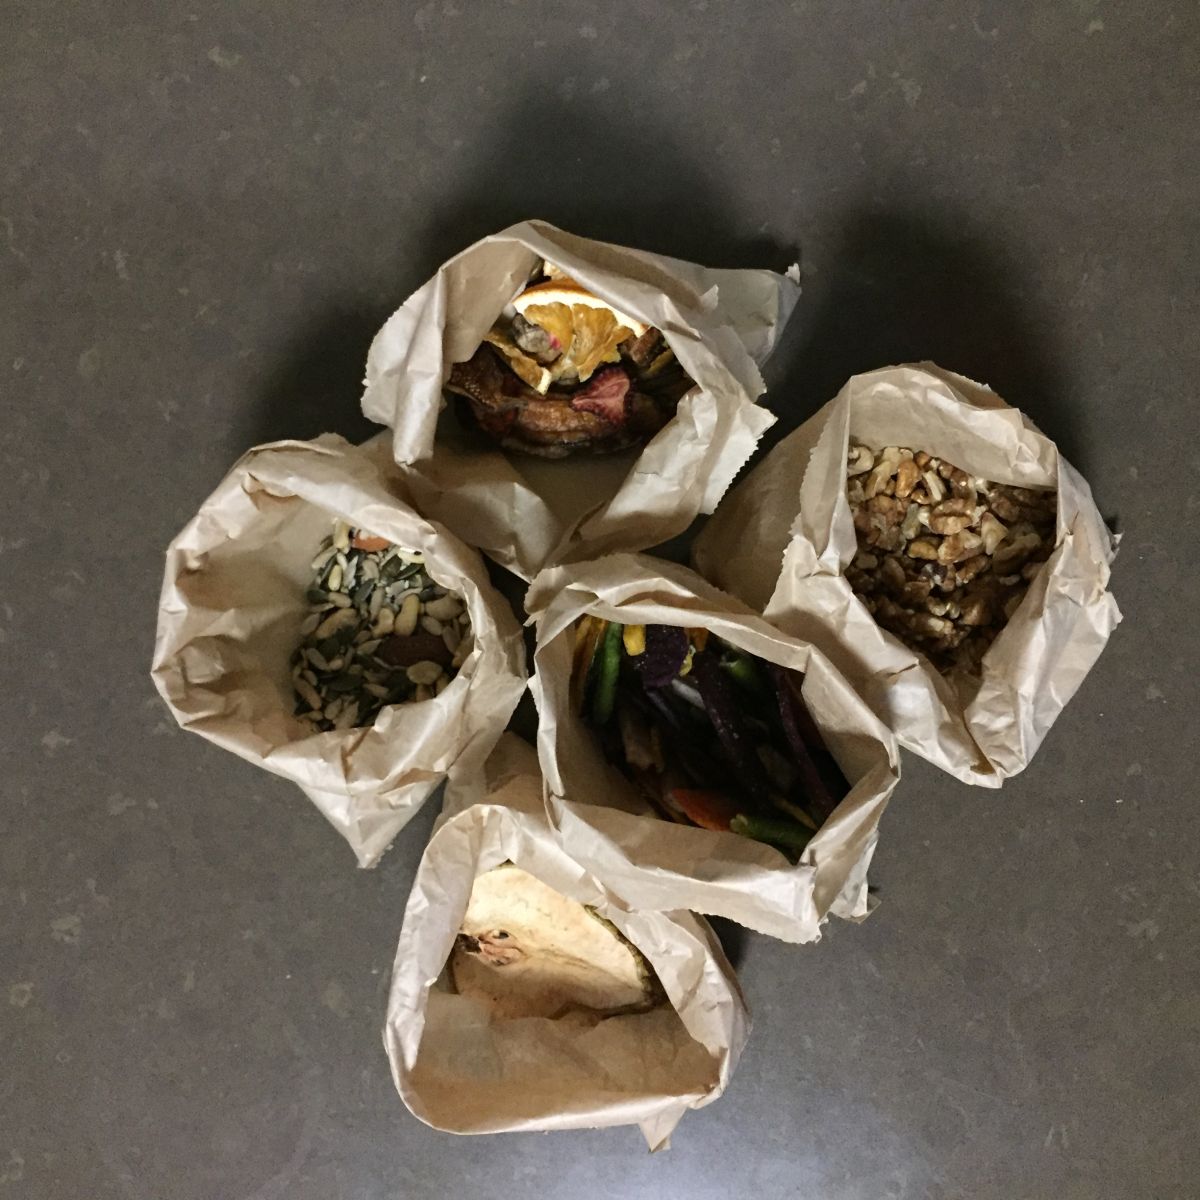 Image: bulk food shopping in paper bags